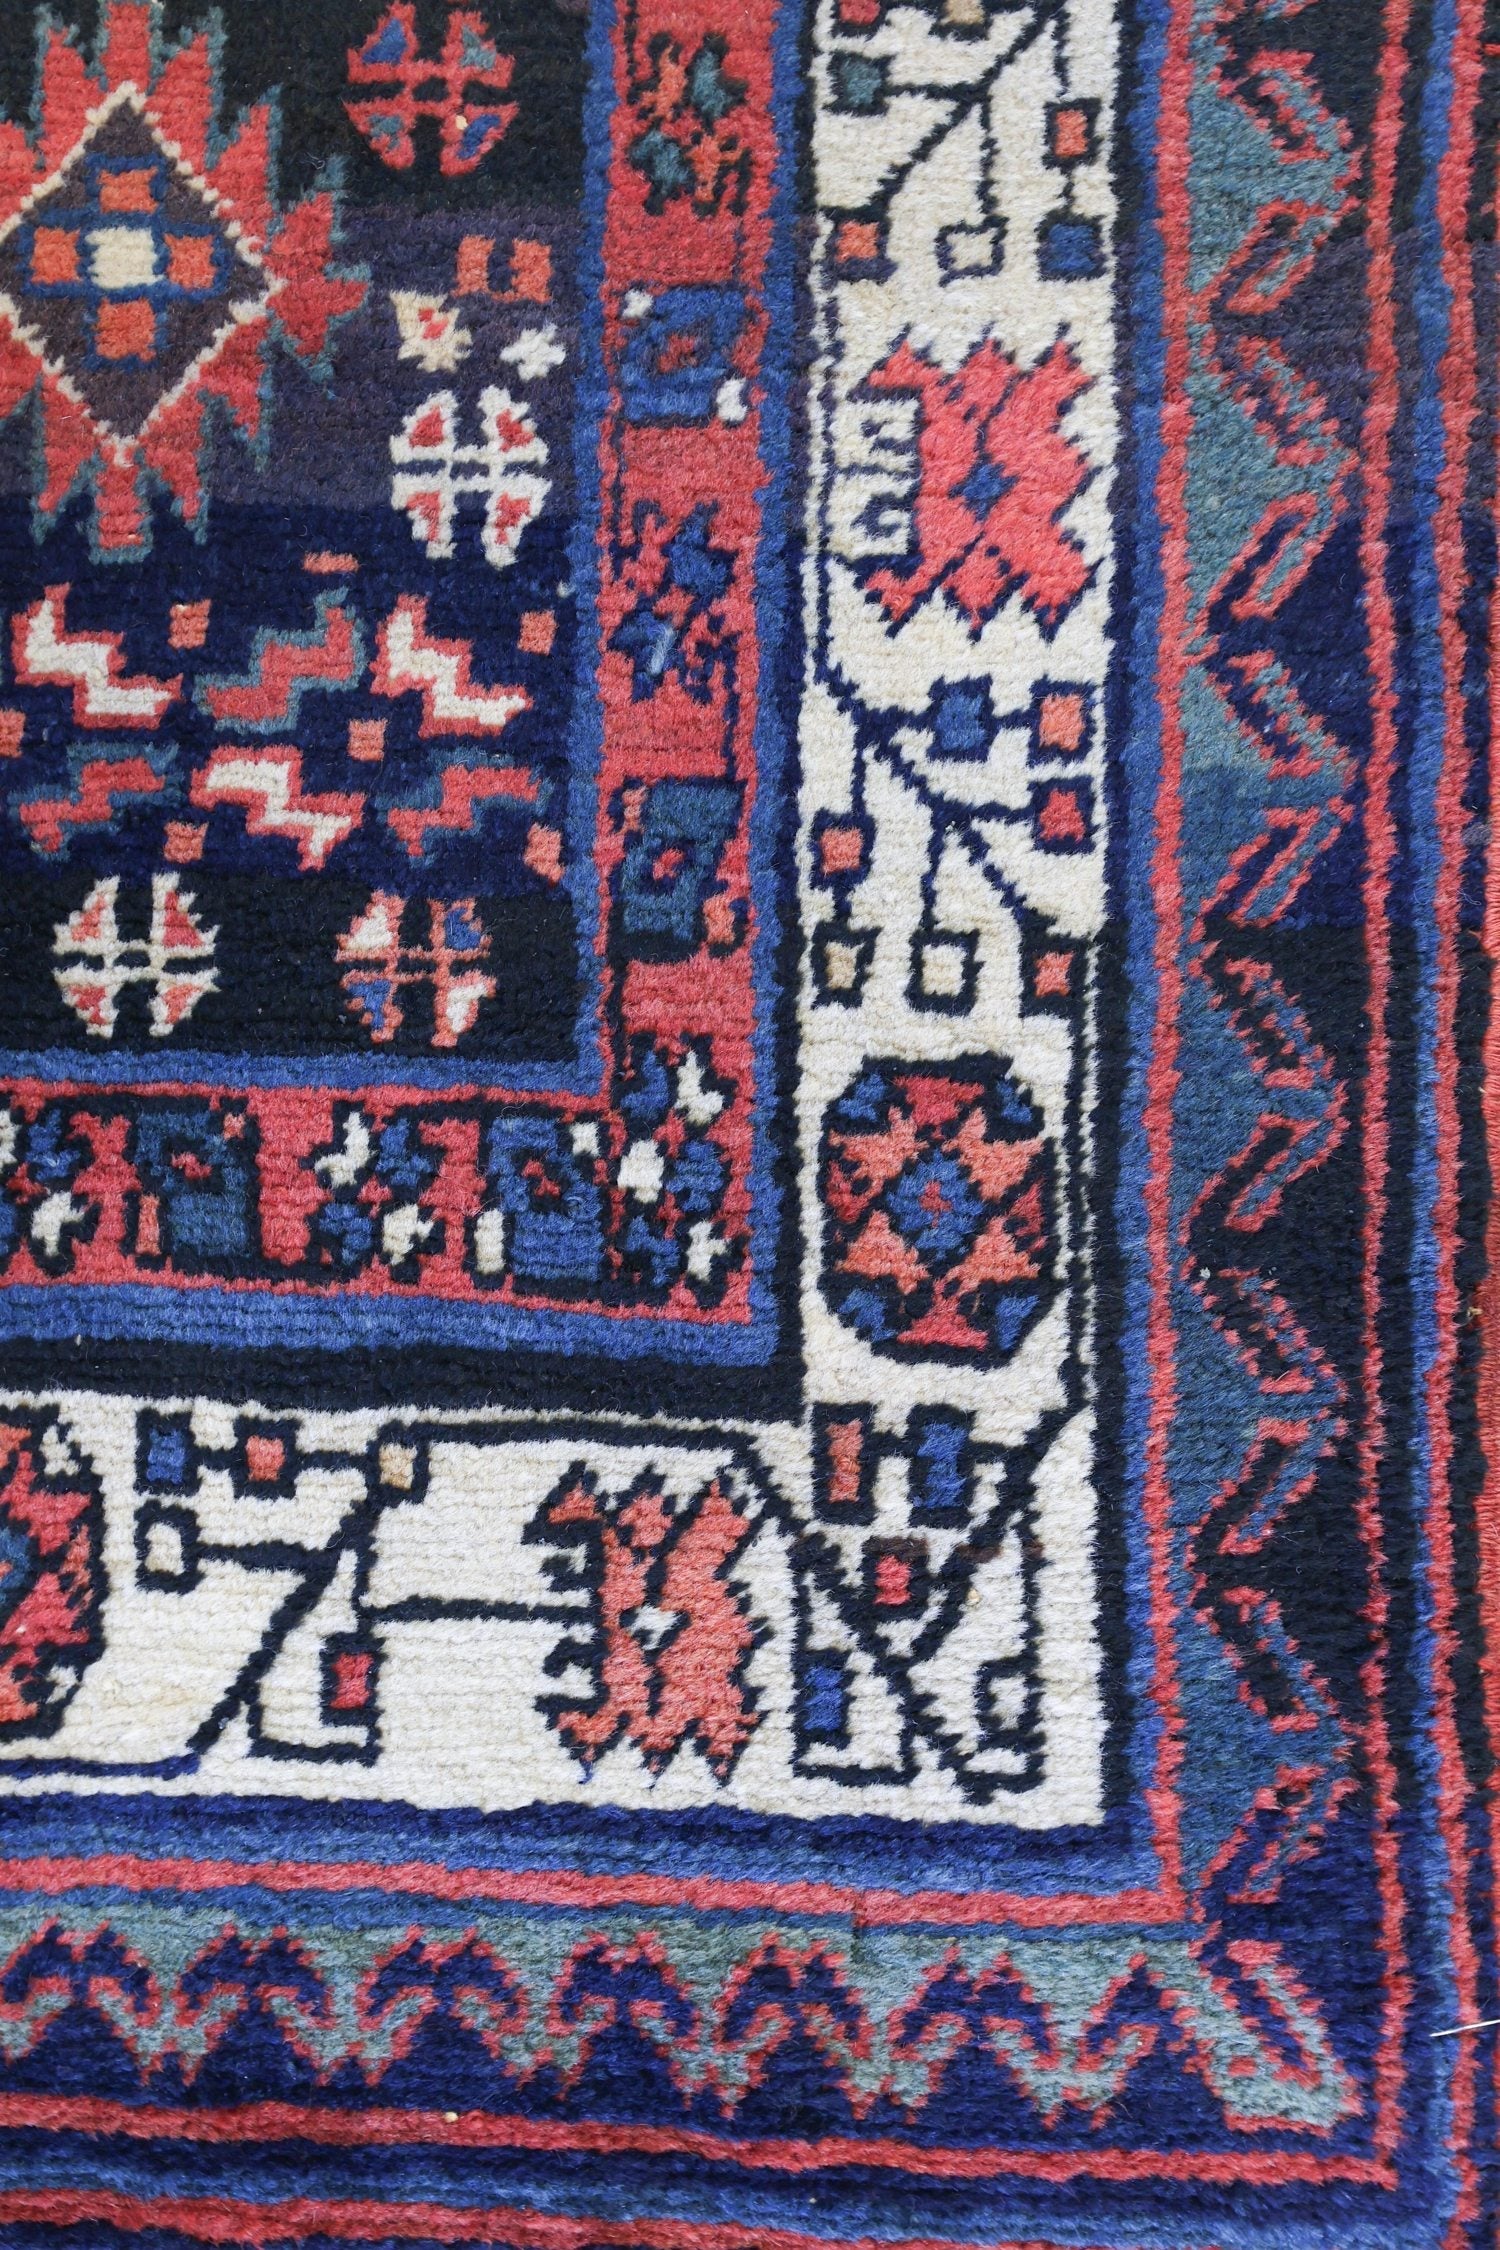 Antique Shasavan Handwoven Tribal Rug, J71130